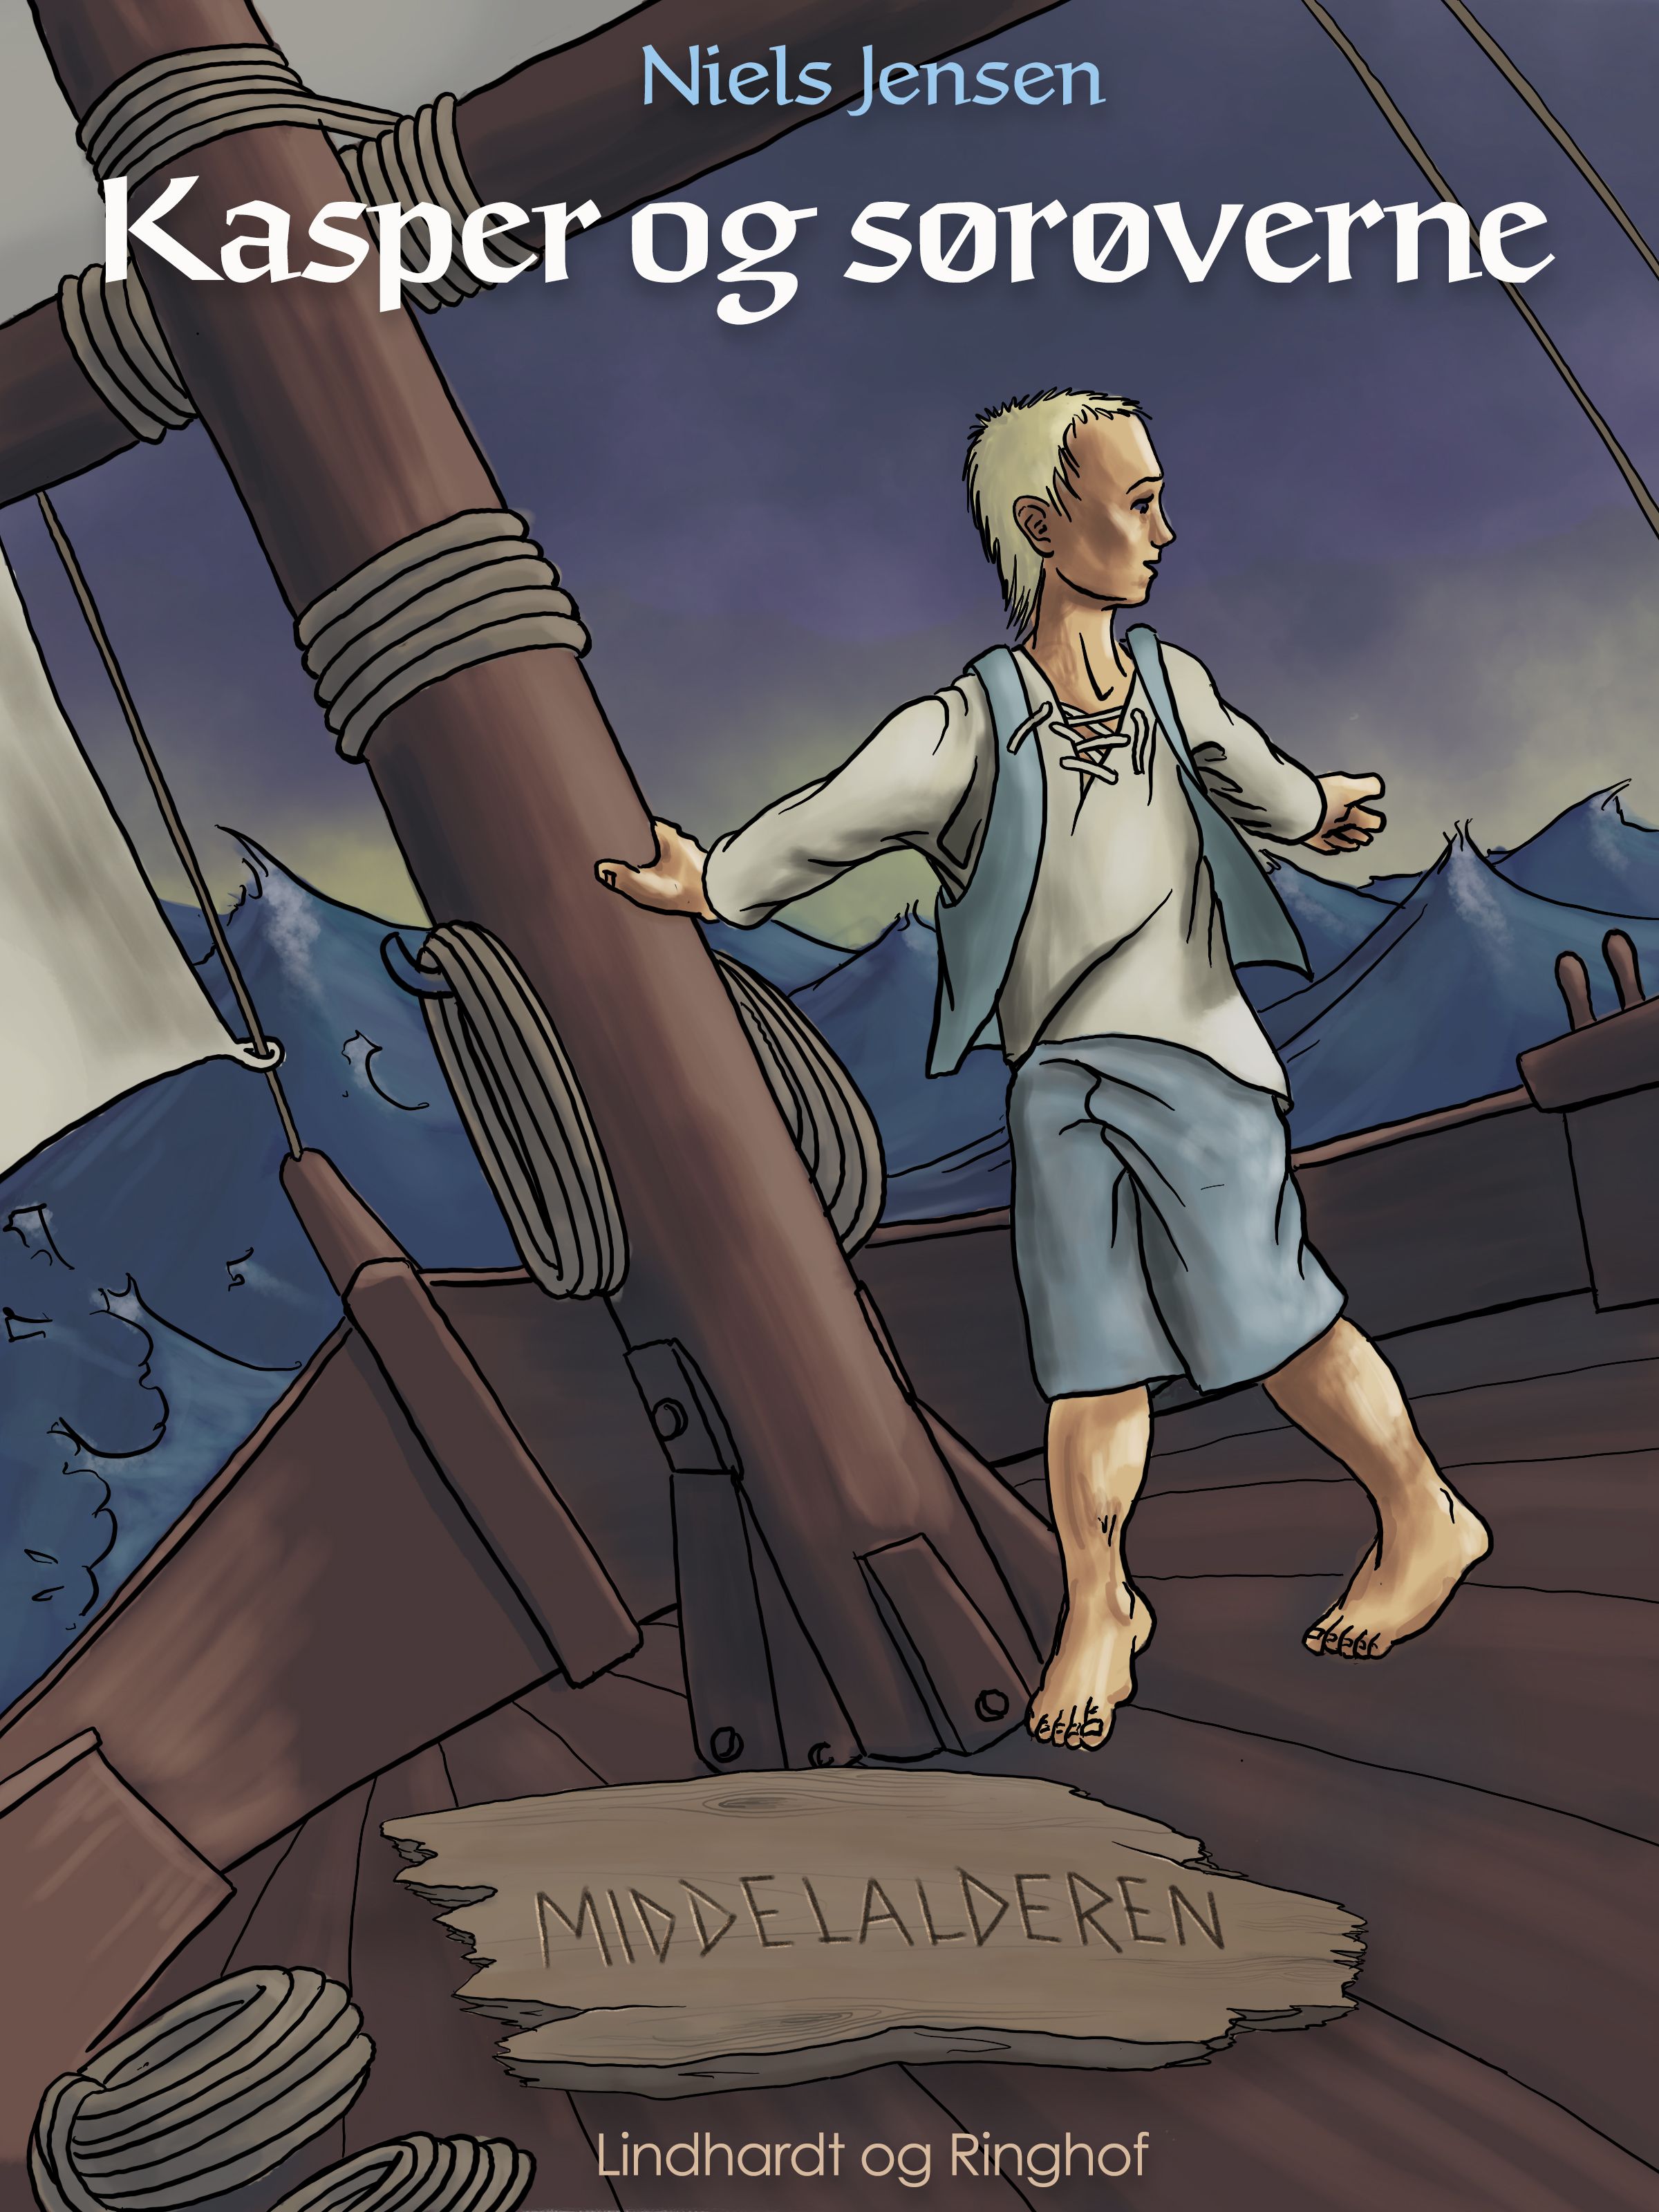 Middelalderen: Kasper og sørøverne, audiobook by Niels Jensen